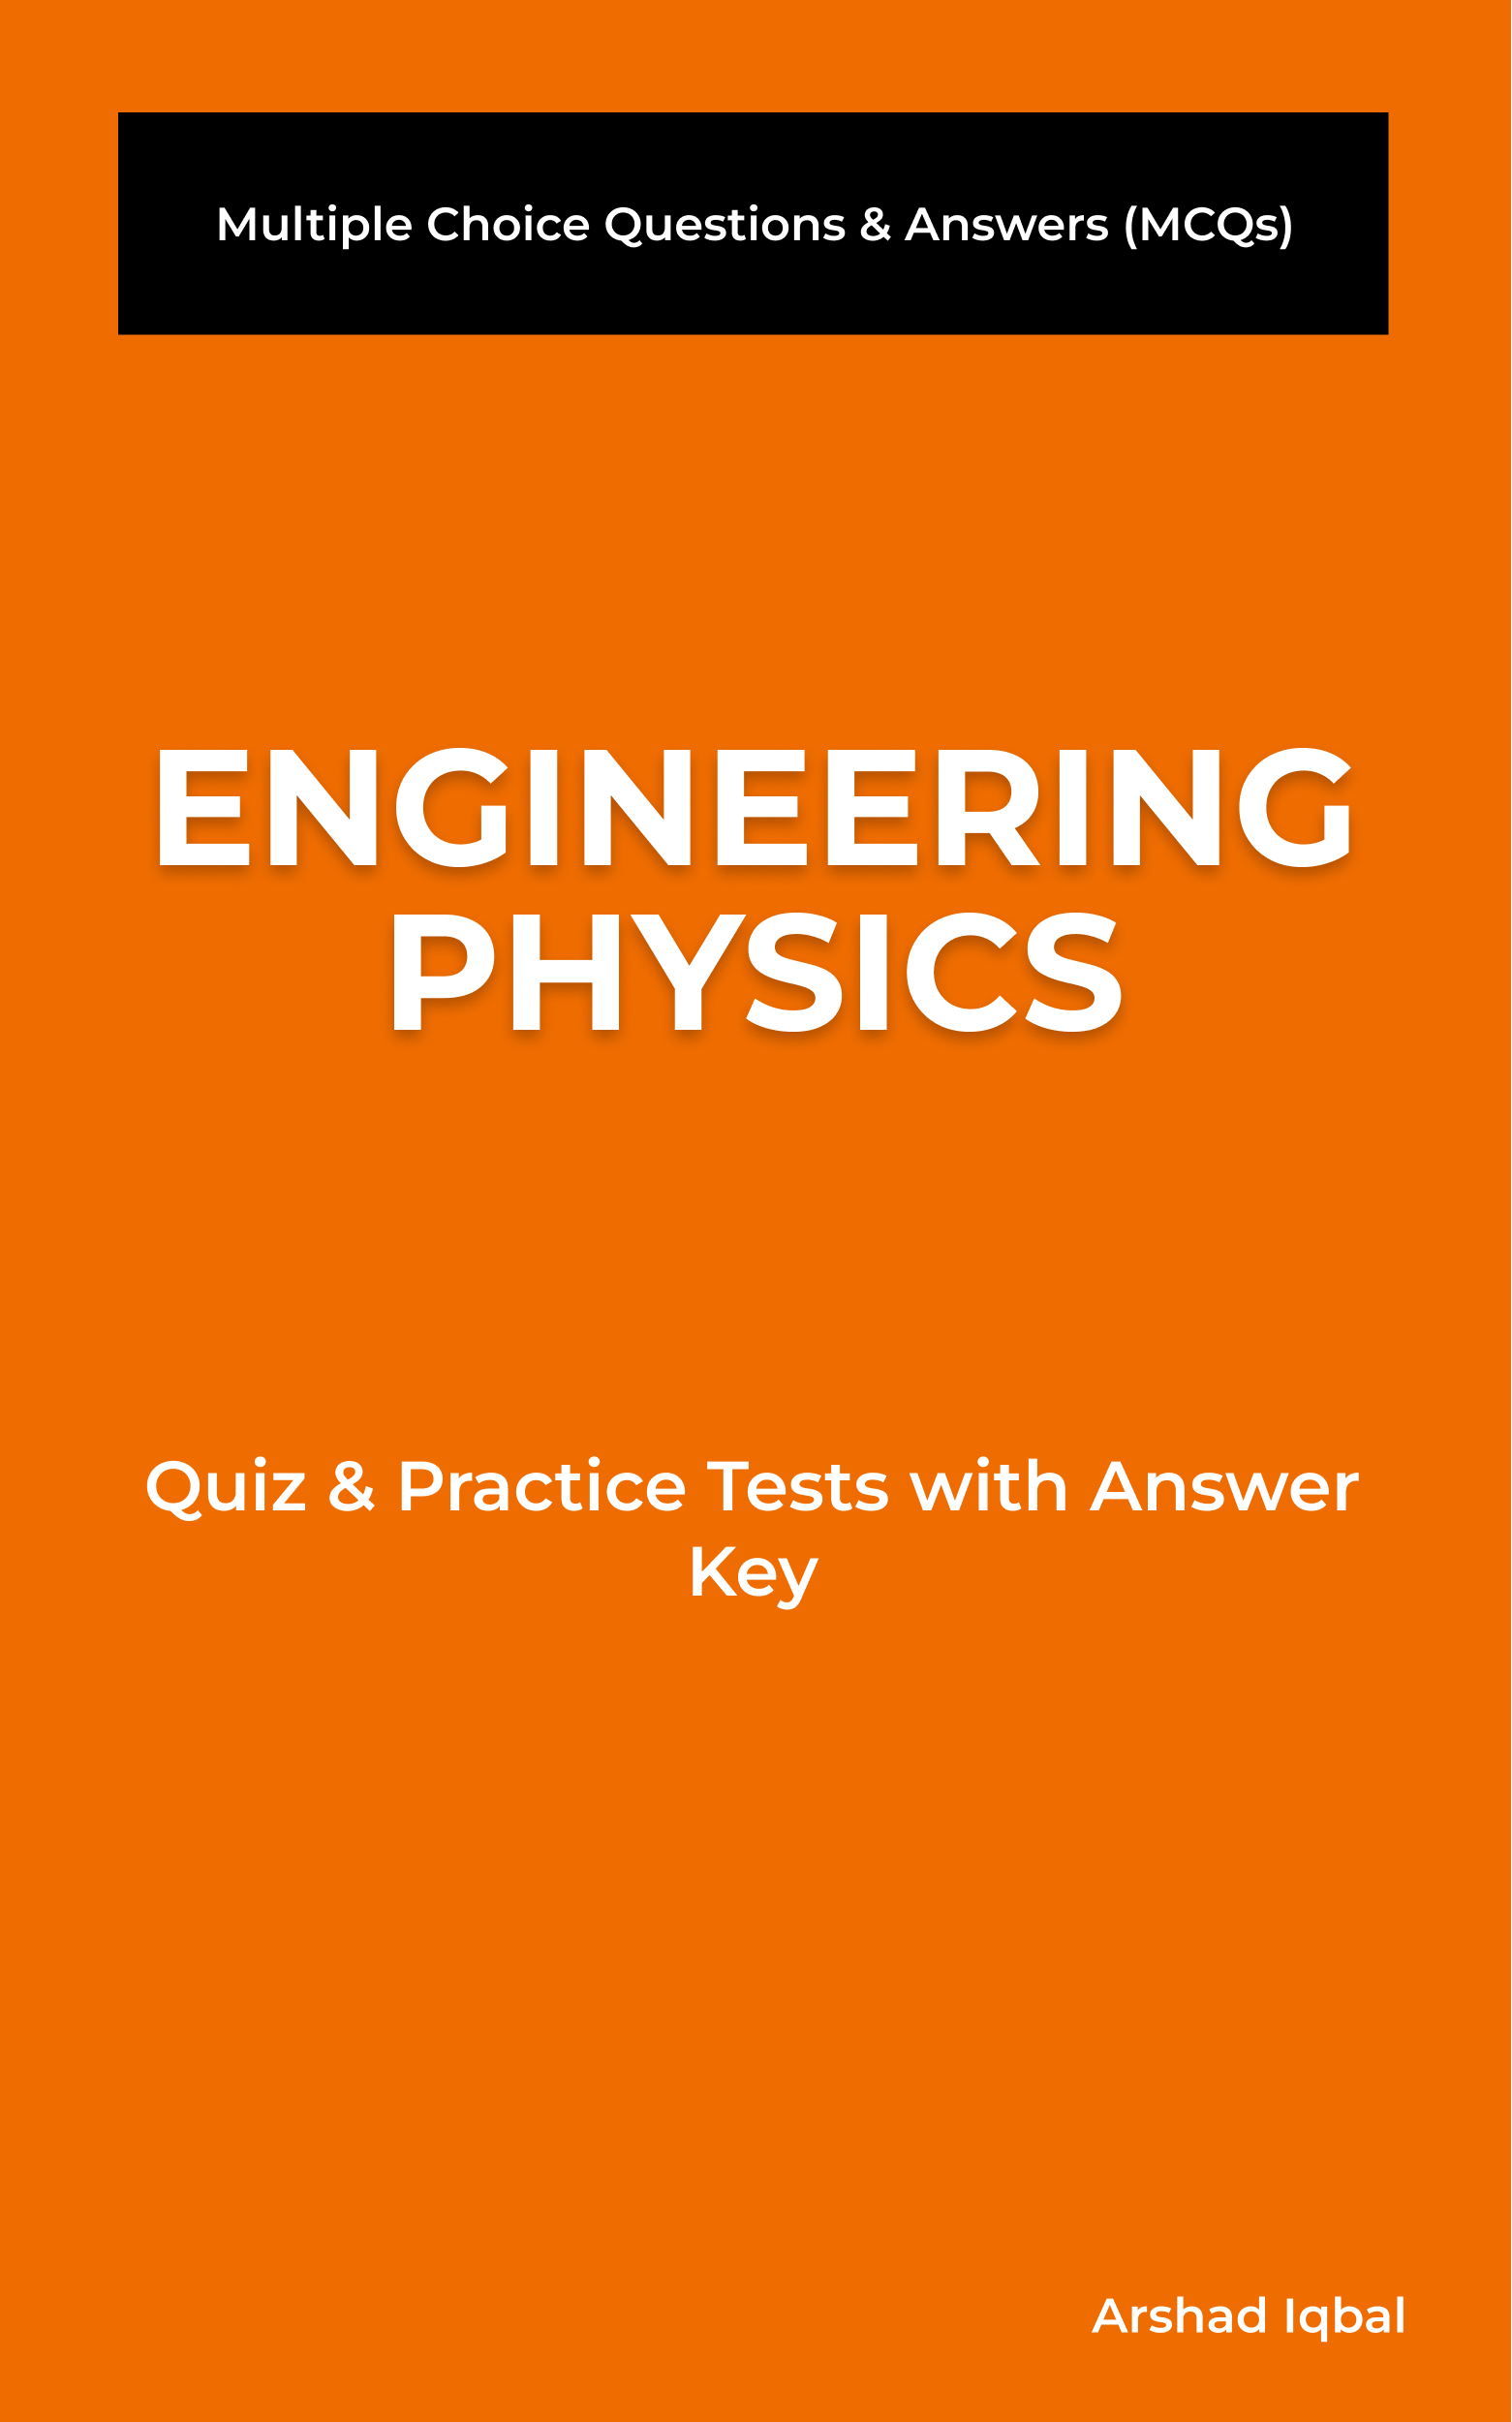 Engineering Physics MCQ Book PDF